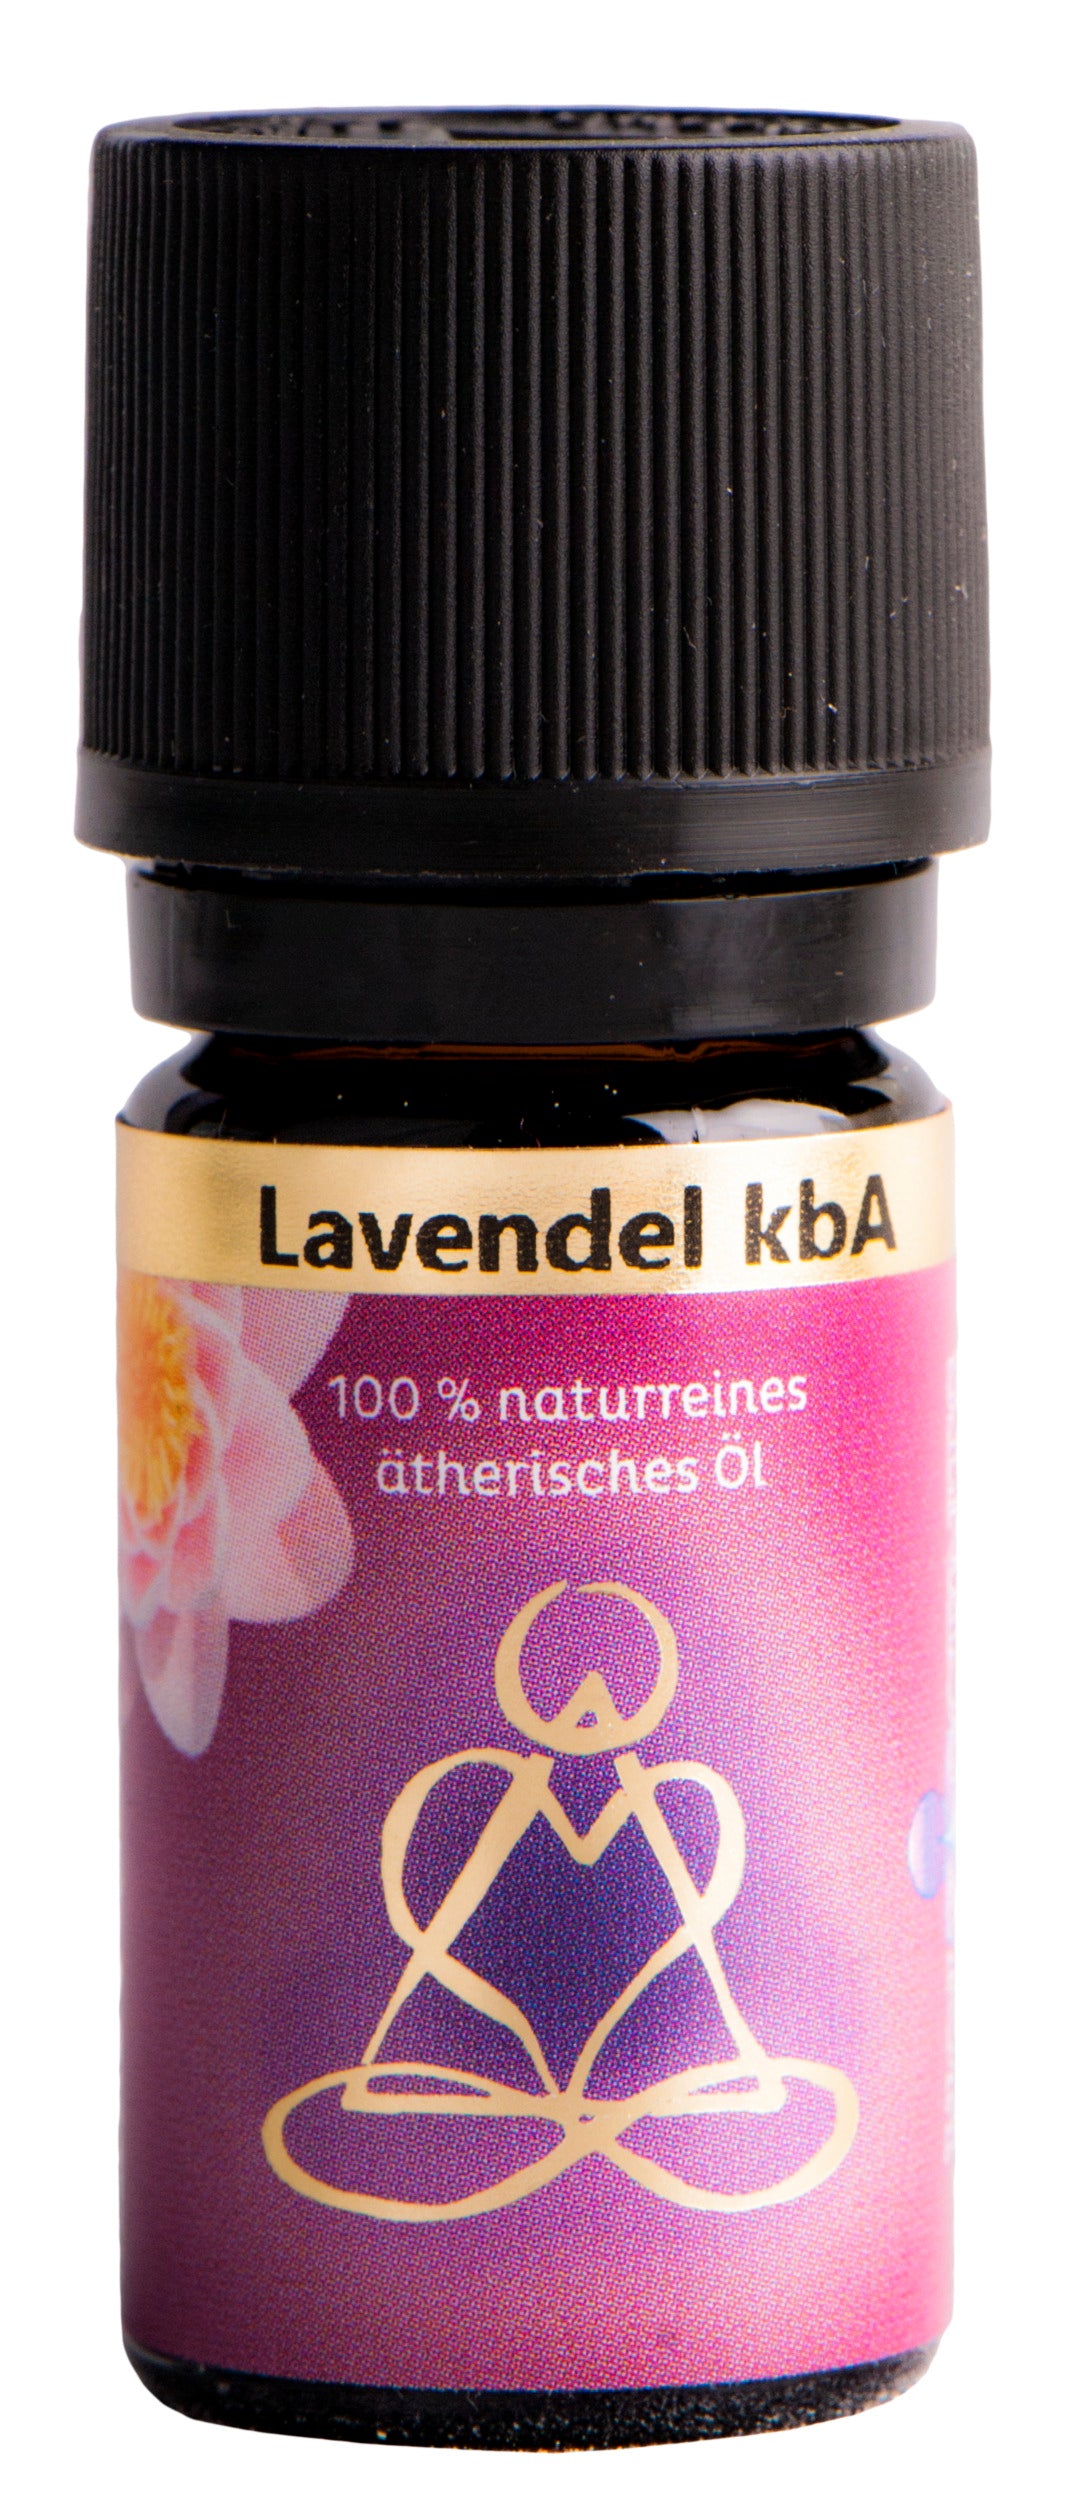 Holy Scents - Lavendel - Ätherisches Öl 5 ml